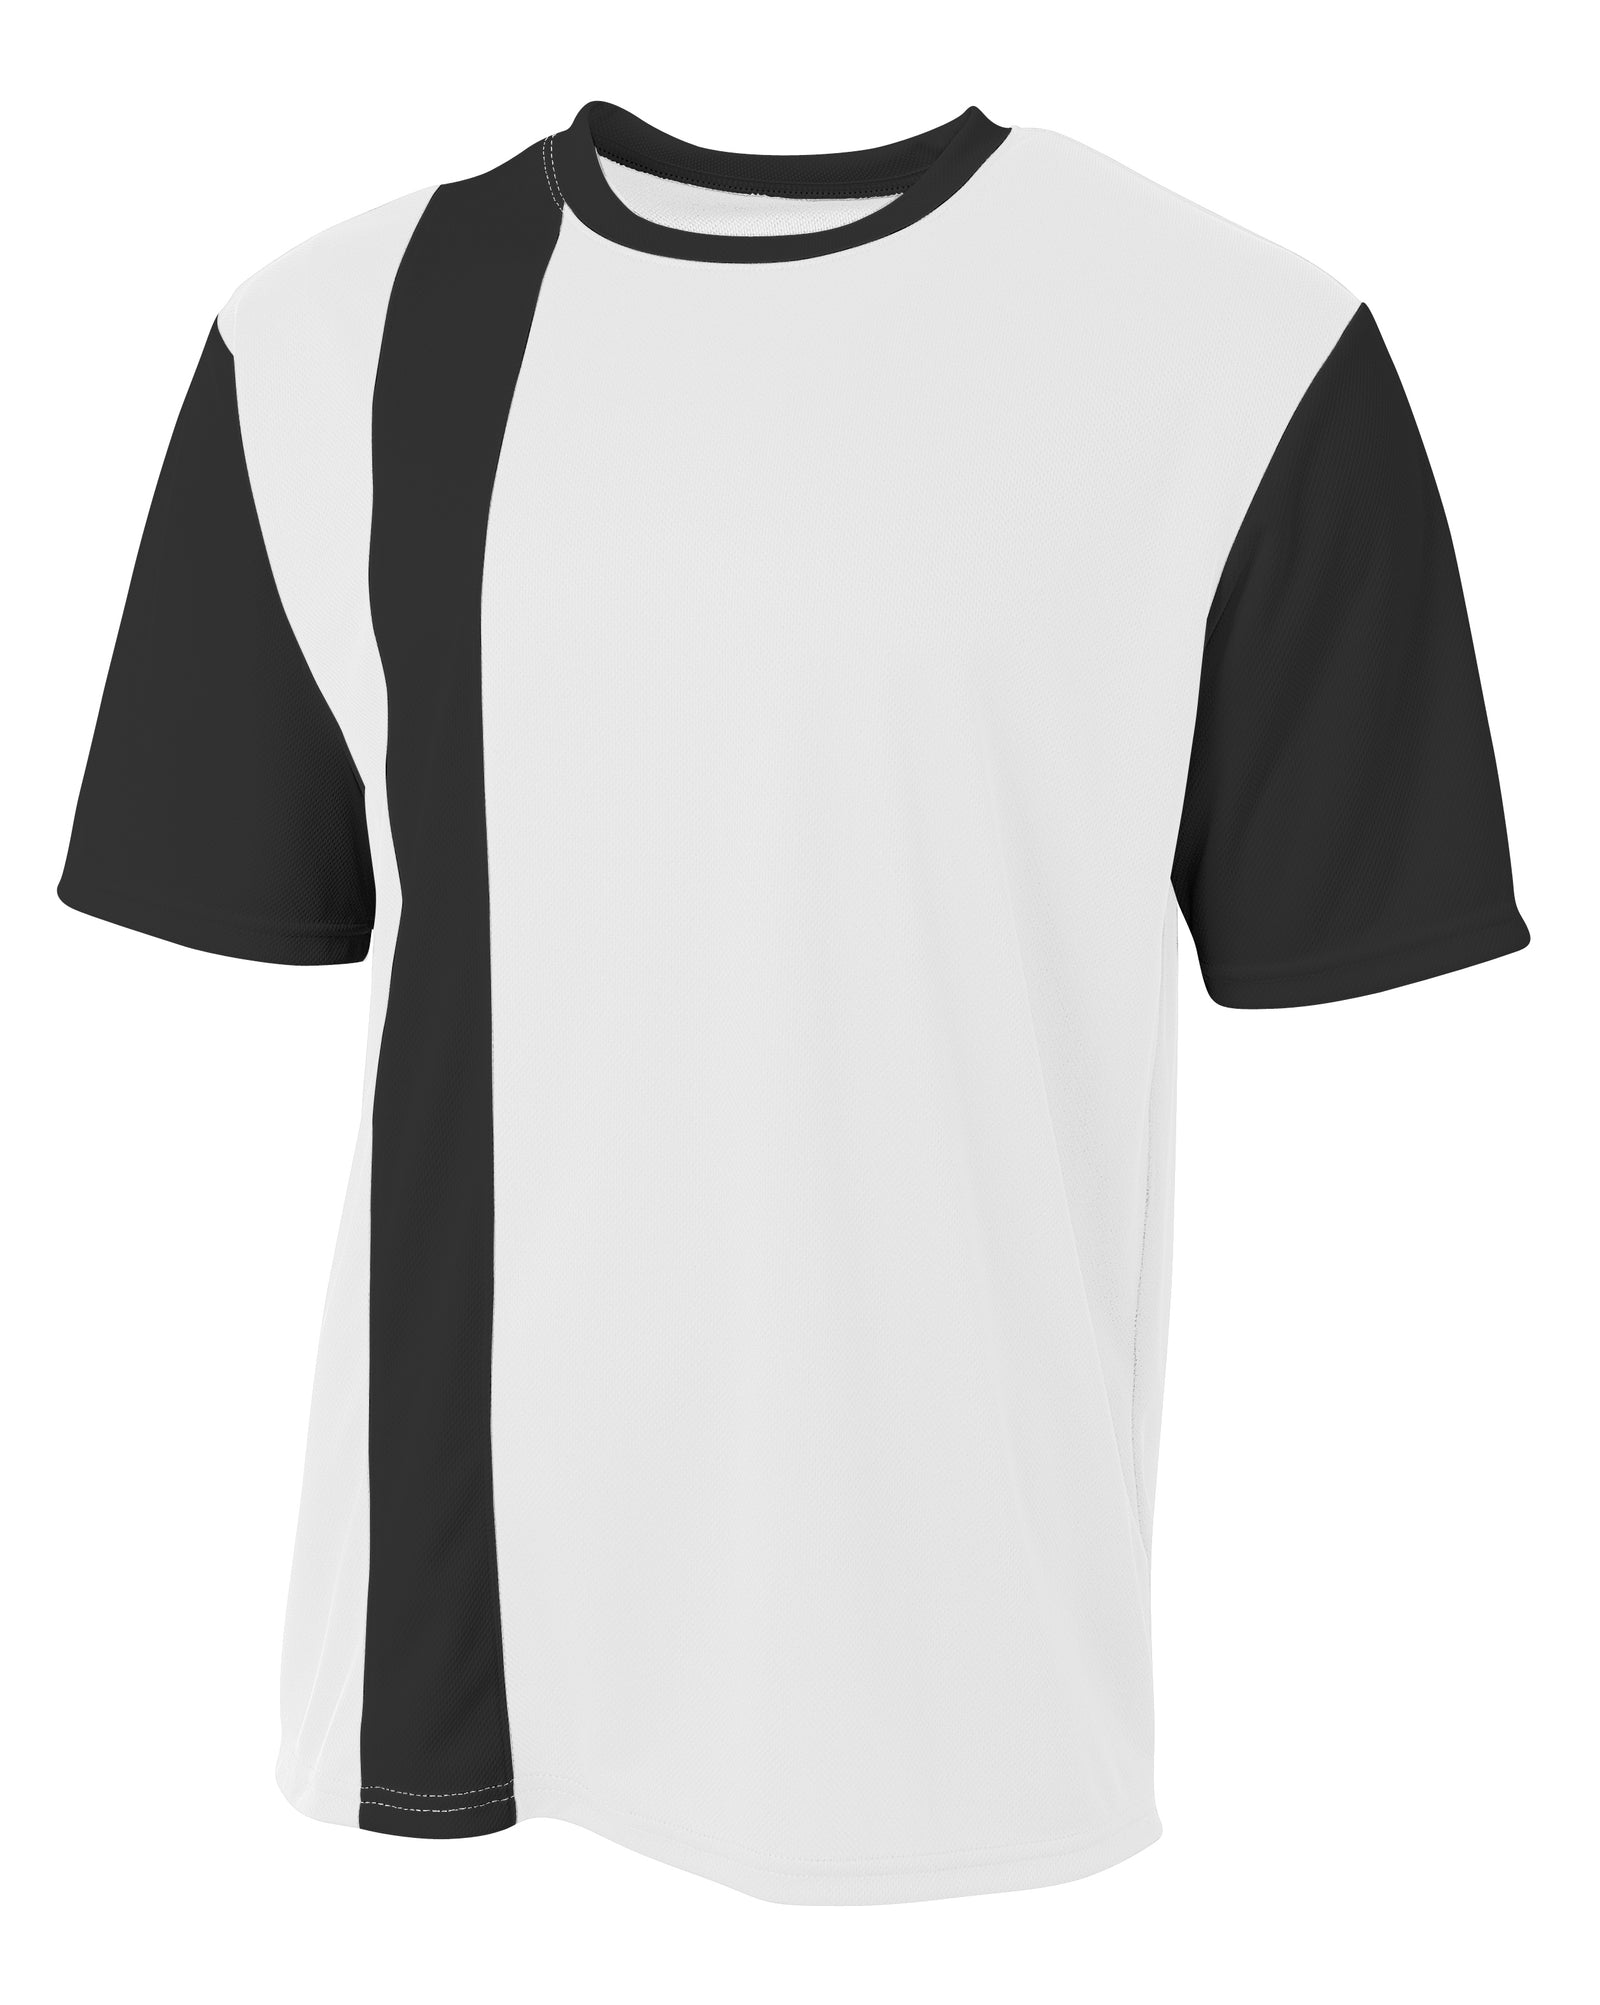 White/black A4 A4 Legend Soccer Jersey